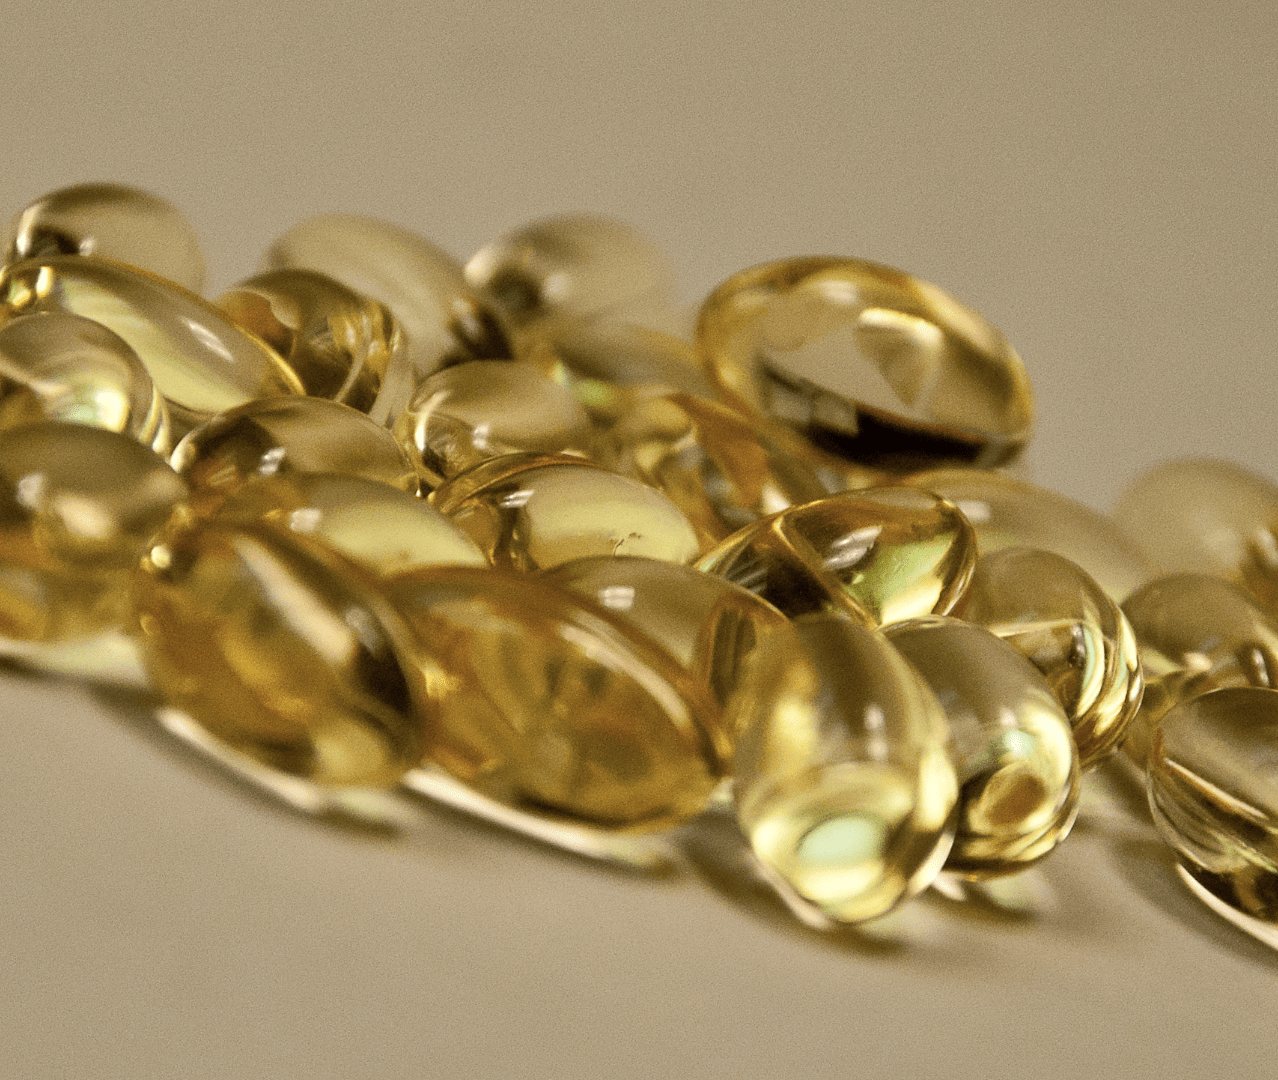 Vitamin capsules | Oregon State University, CC